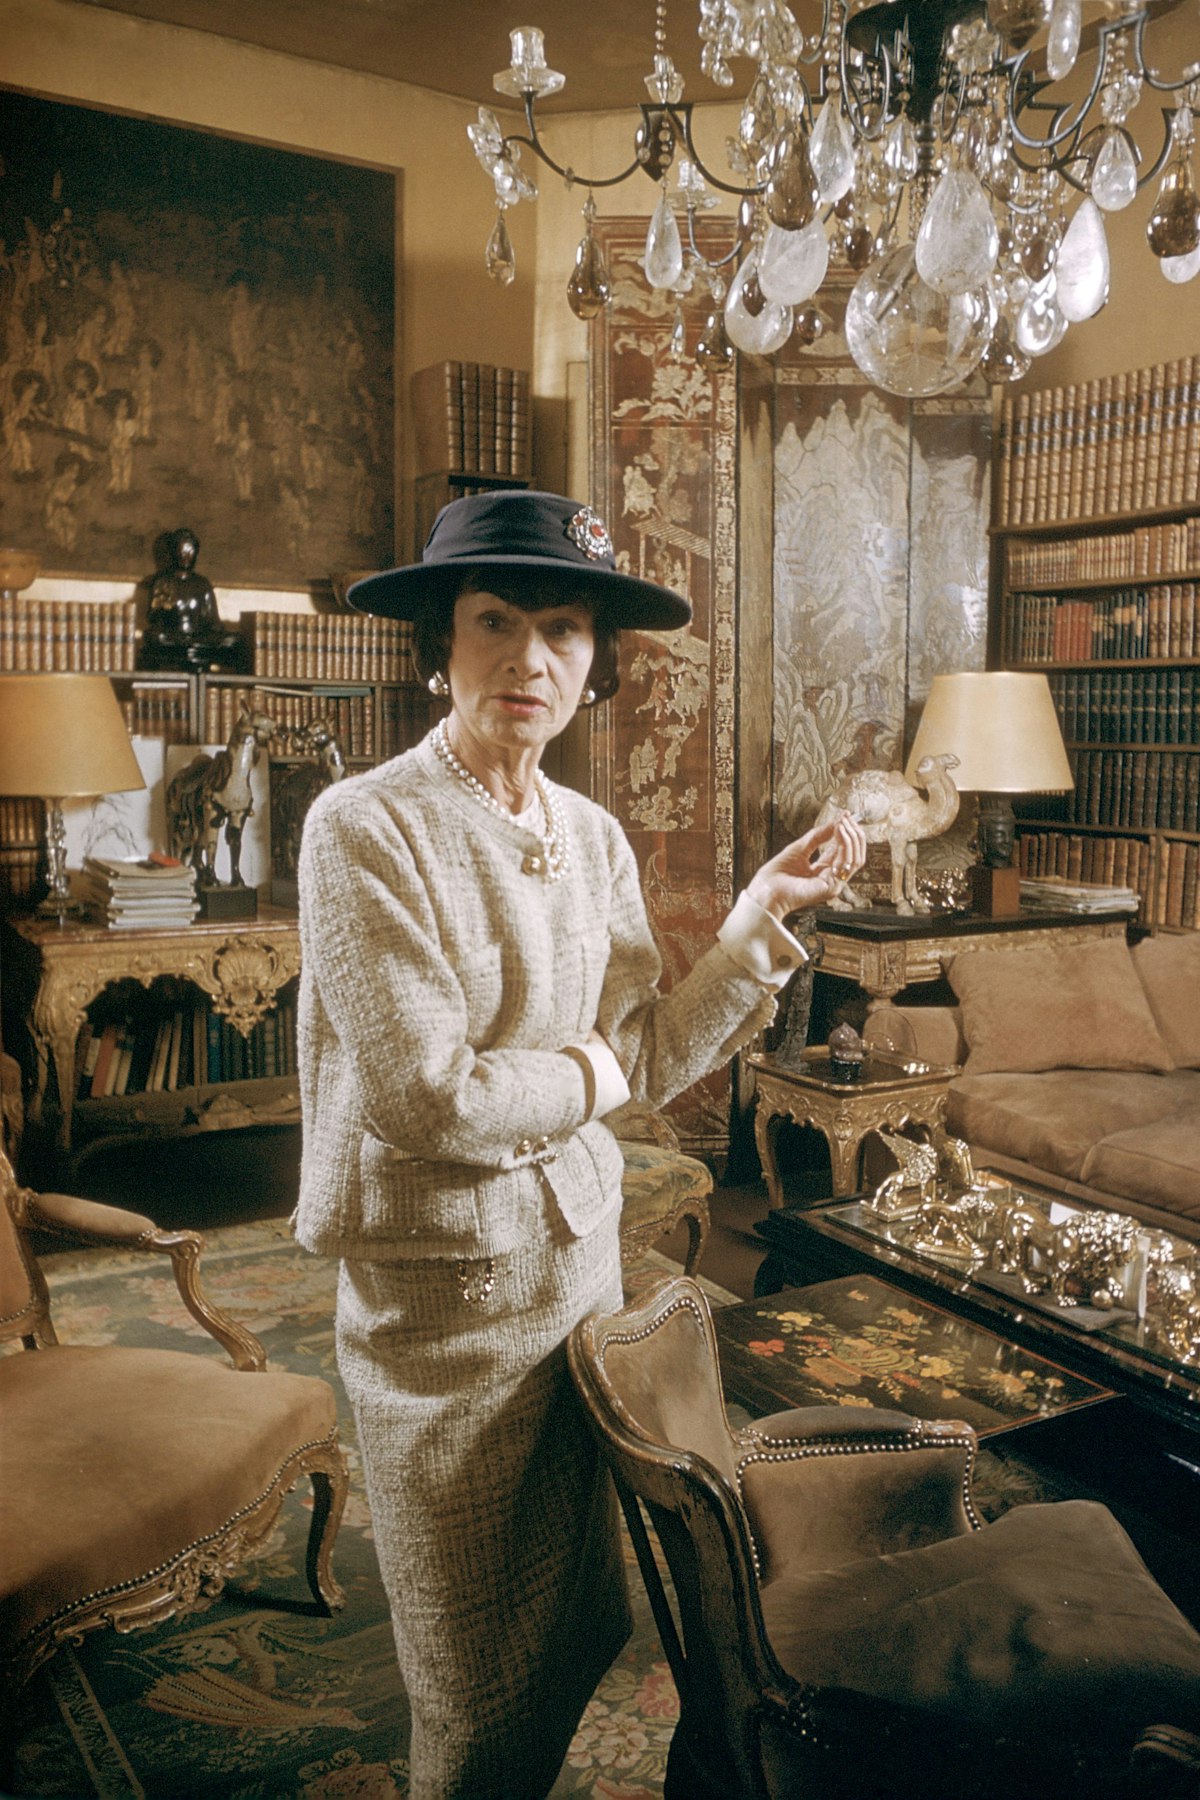 WATCH: A Rare Look Inside Coco Chanel's Parisian Home